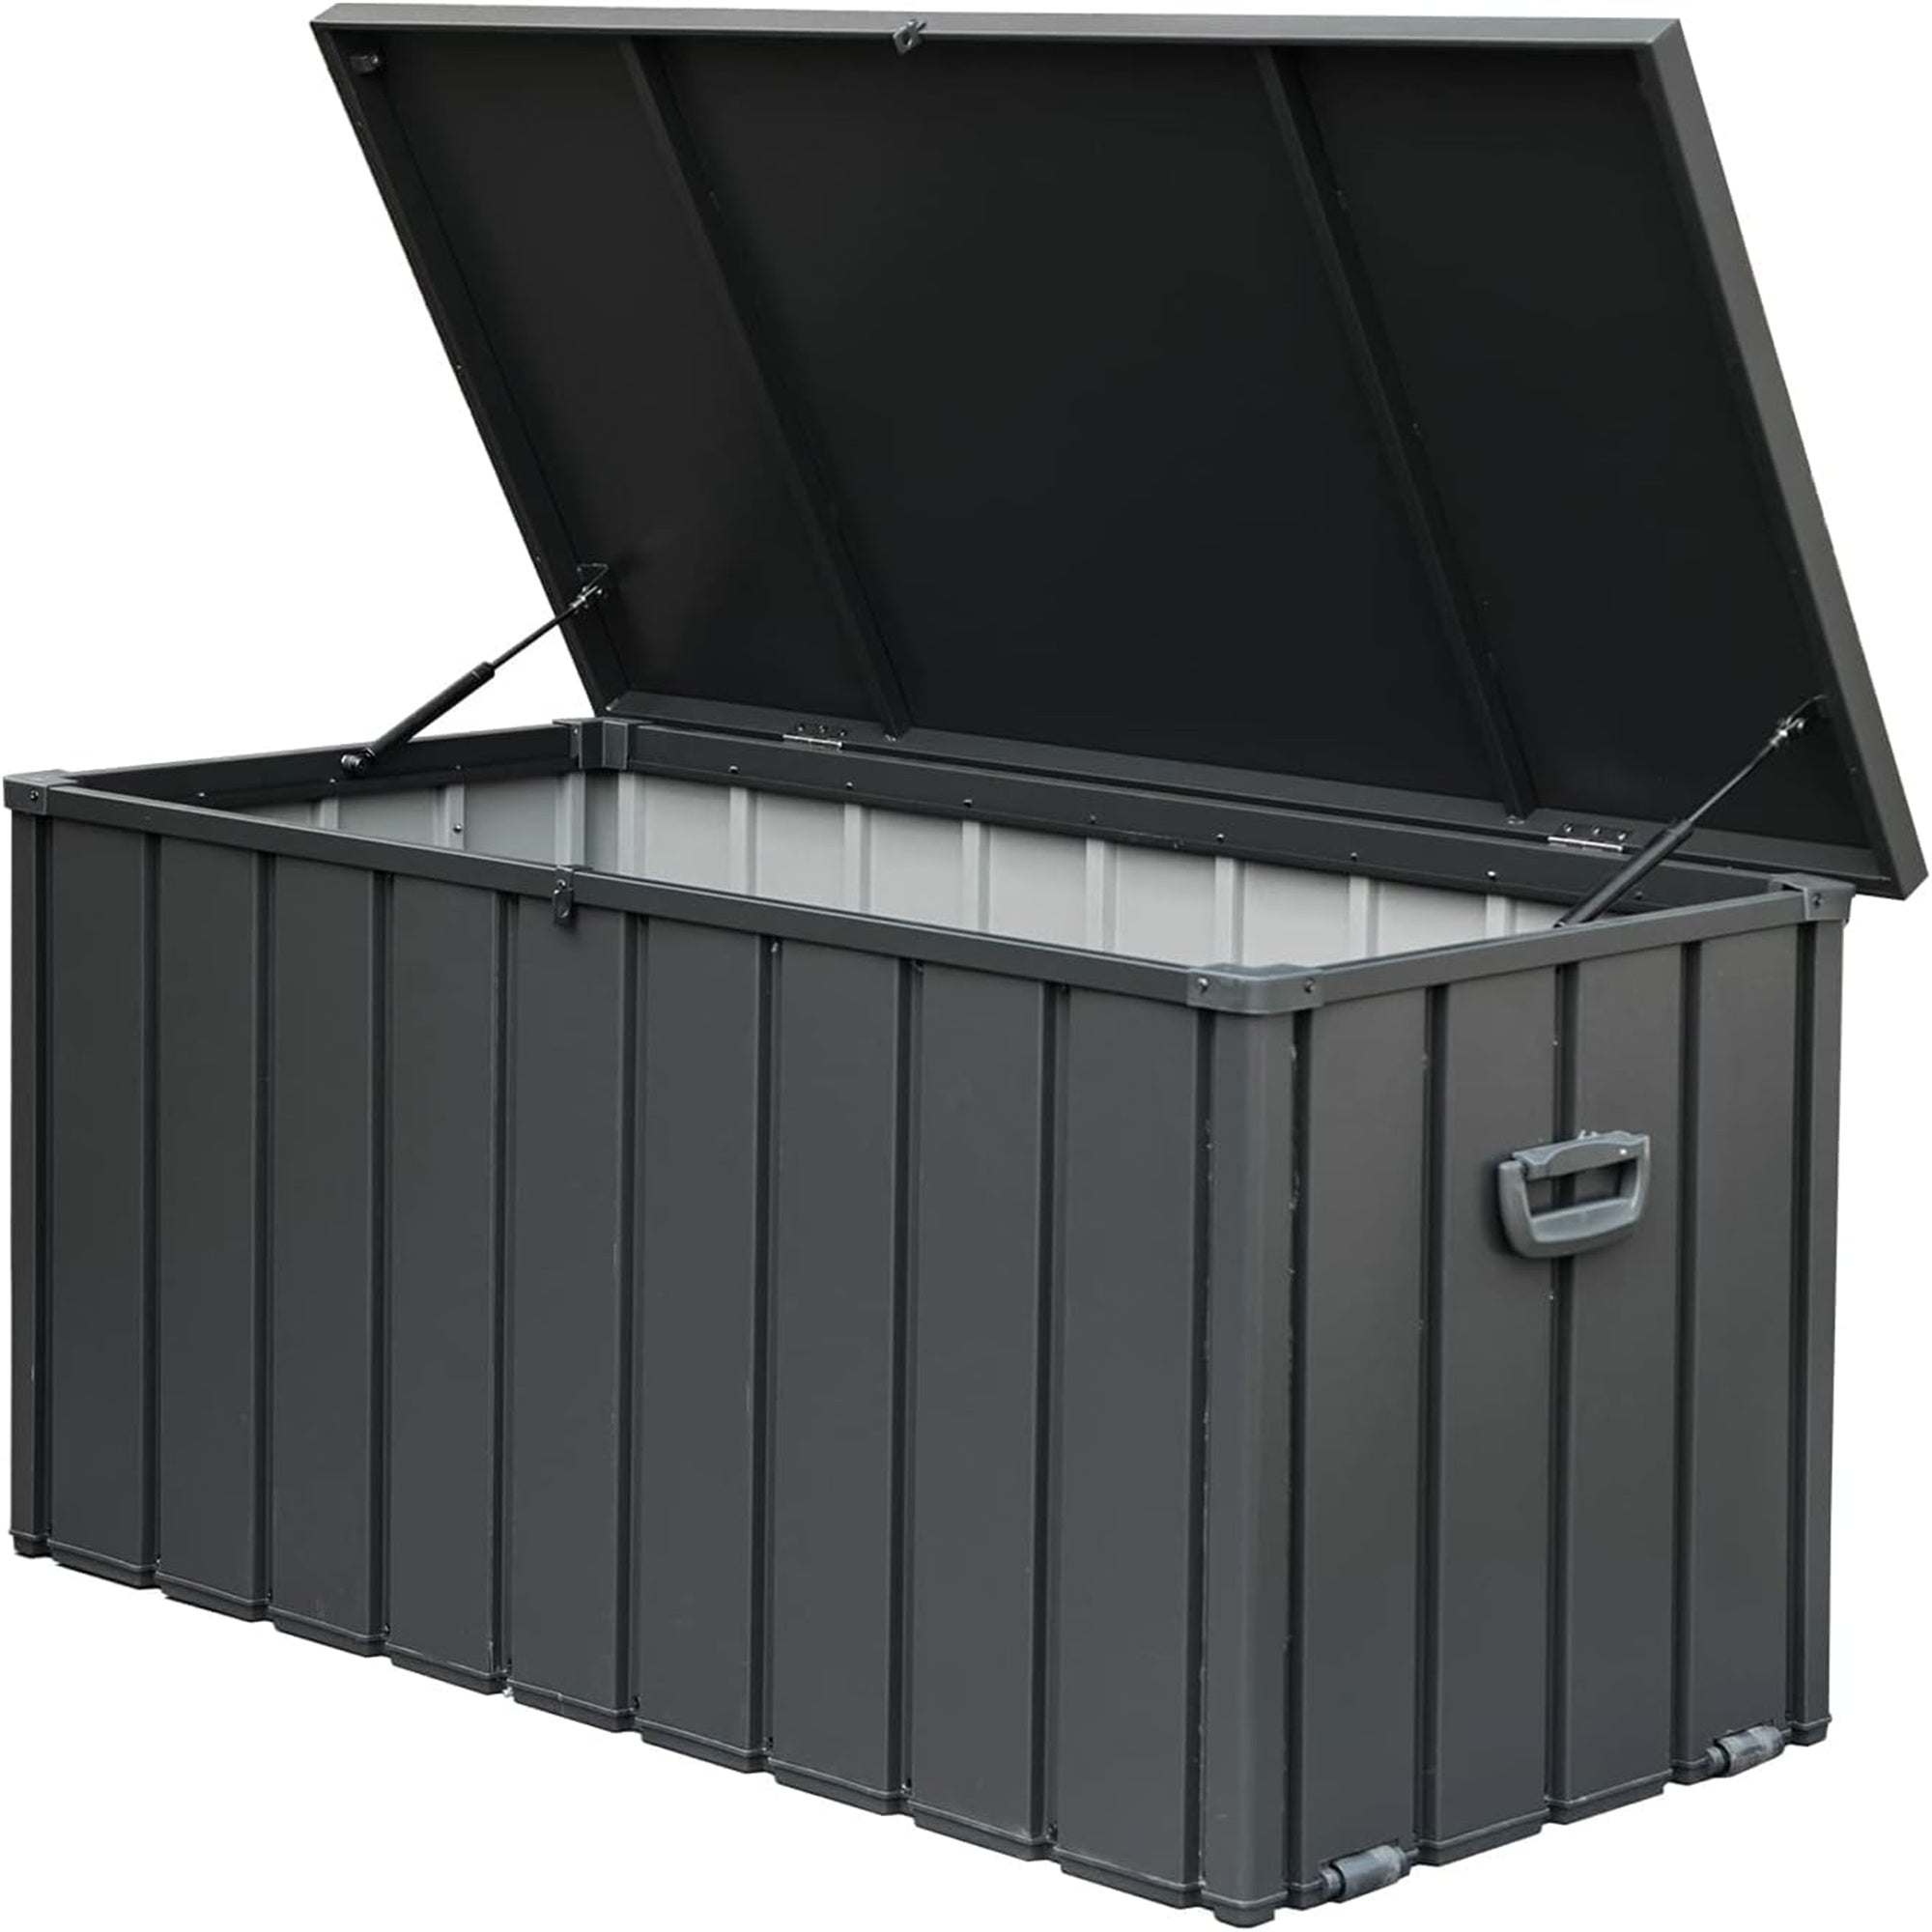 Dropship Outdoor Storage Box, 113 Gallon Wicker Patio Deck Boxes